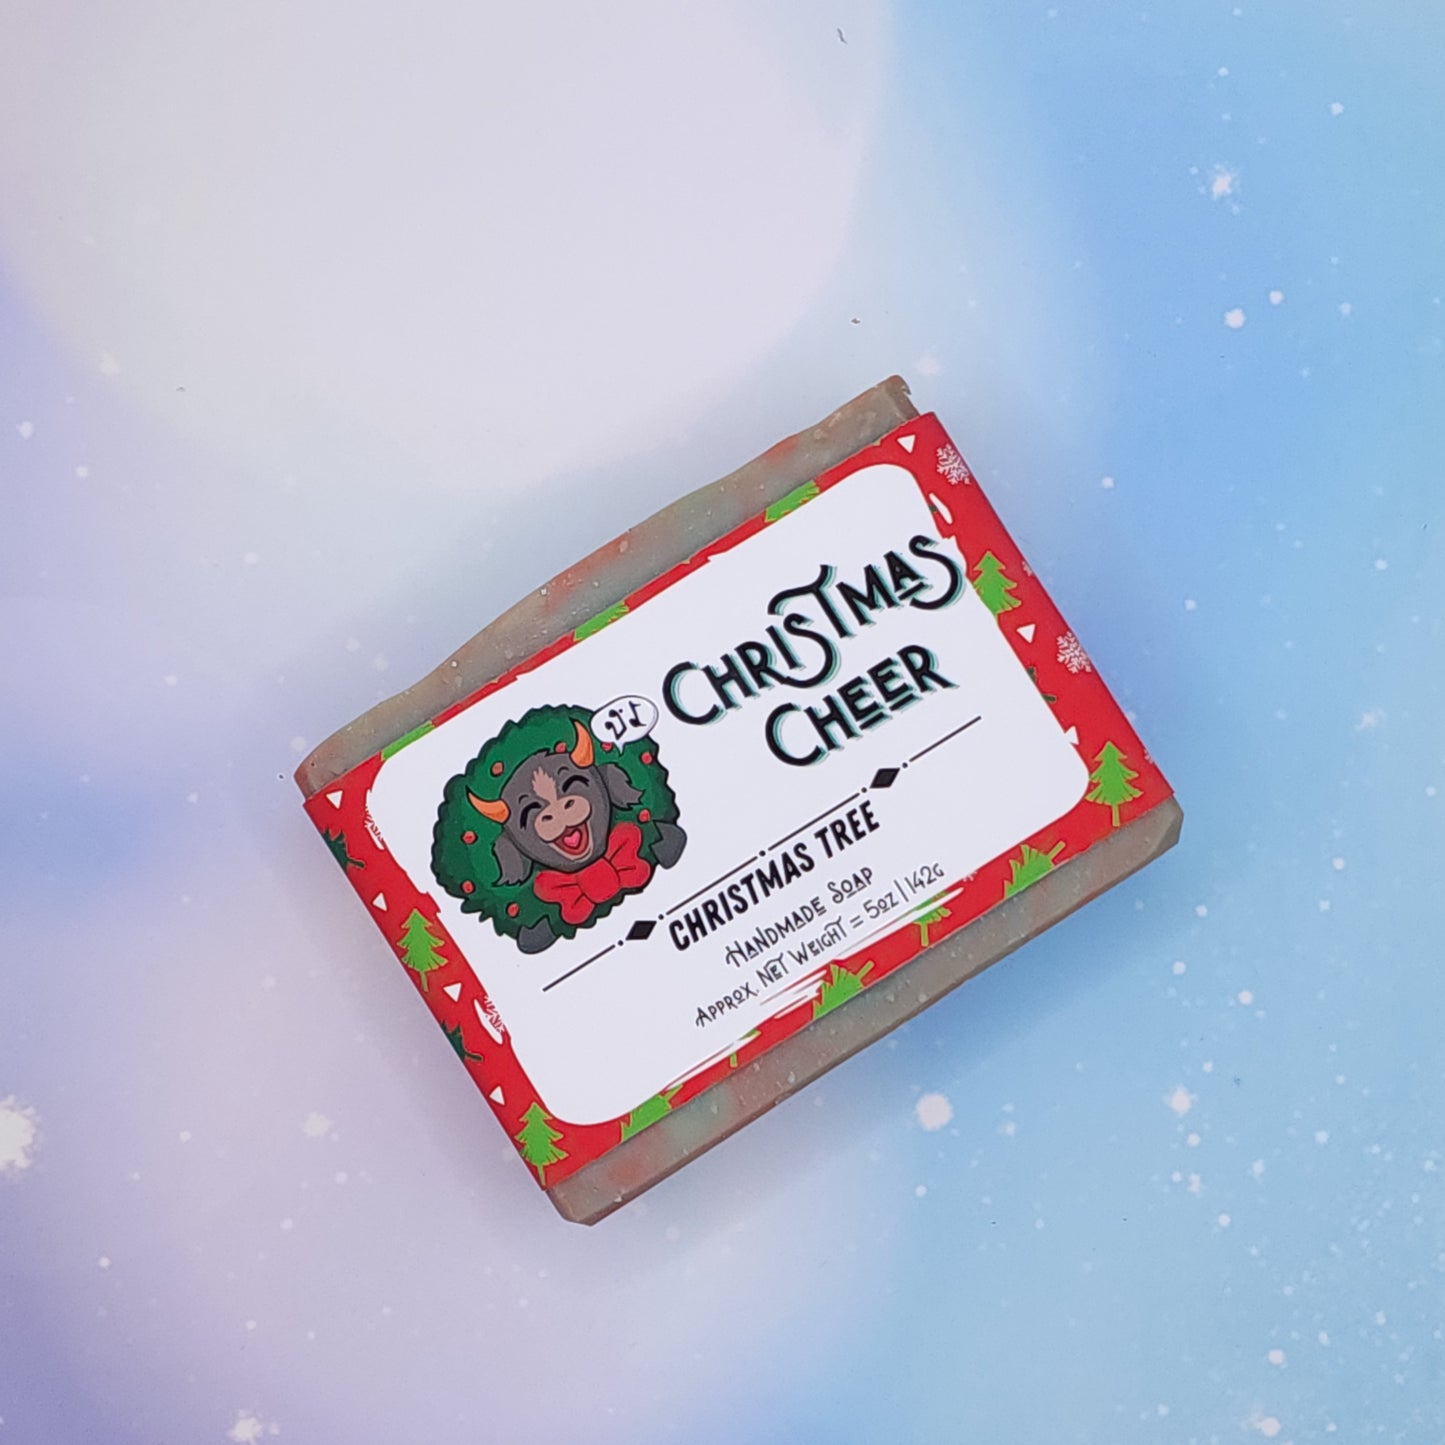 Christmas Cheer Soap